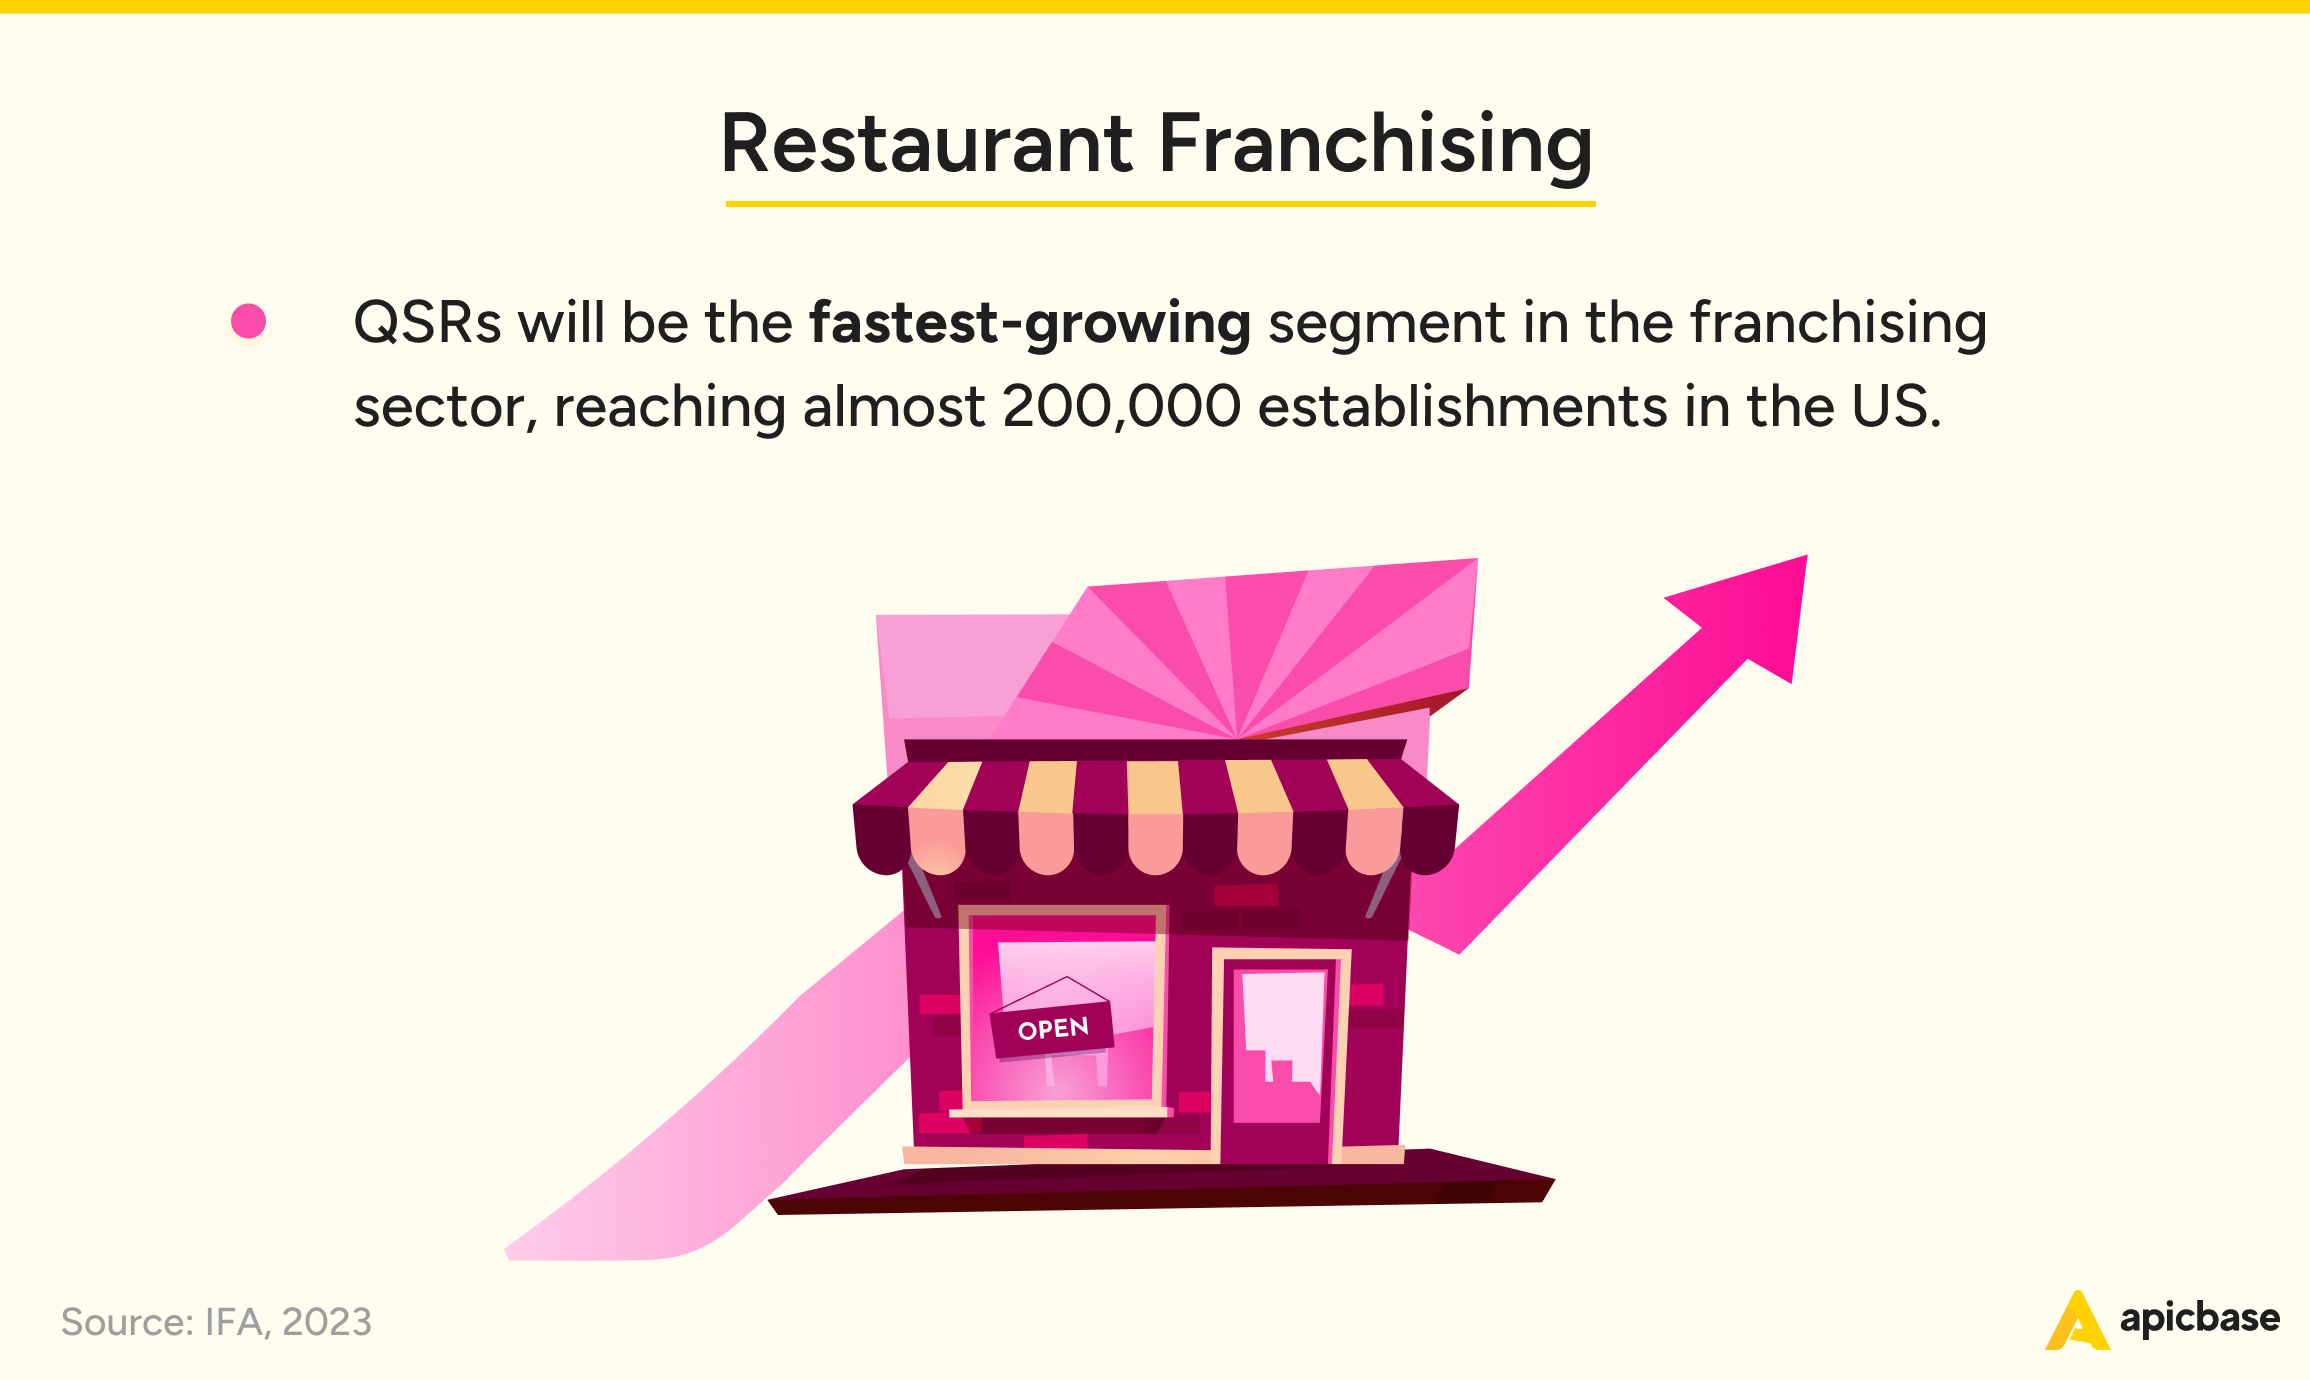 Restaurant Franchising Statistics